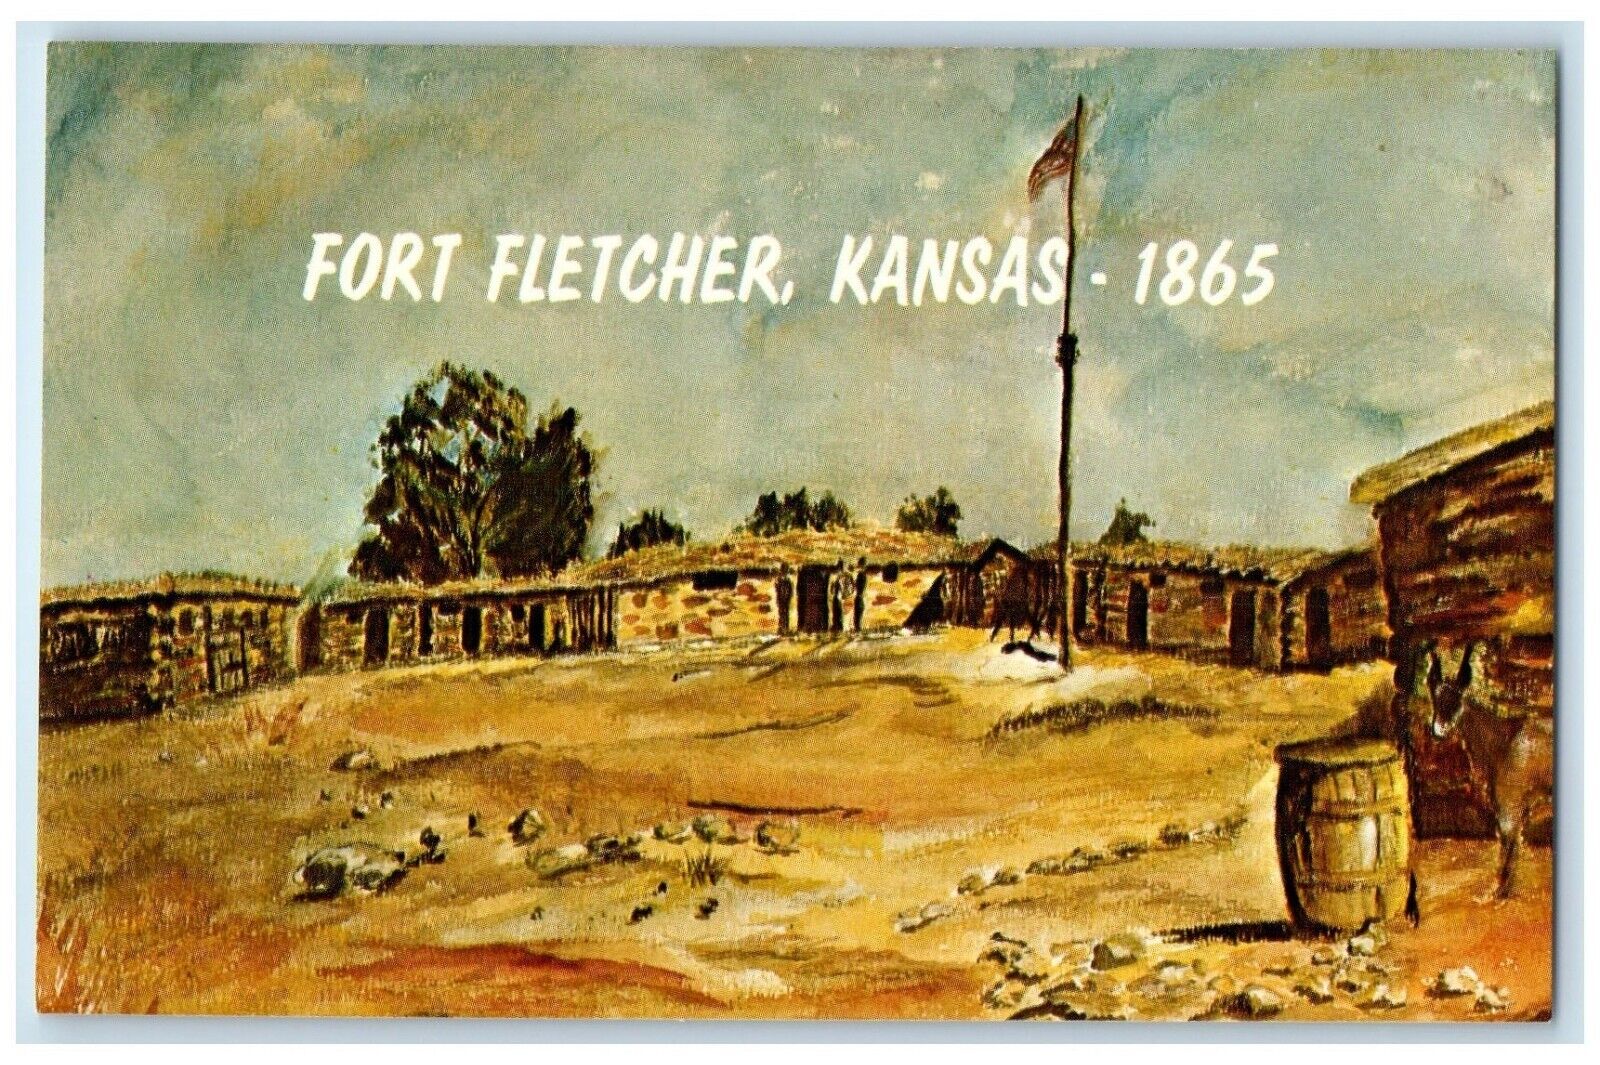 1960 Fort Fletcher Camping Picnic Grounds West Russell Kansas Vintage Postcard